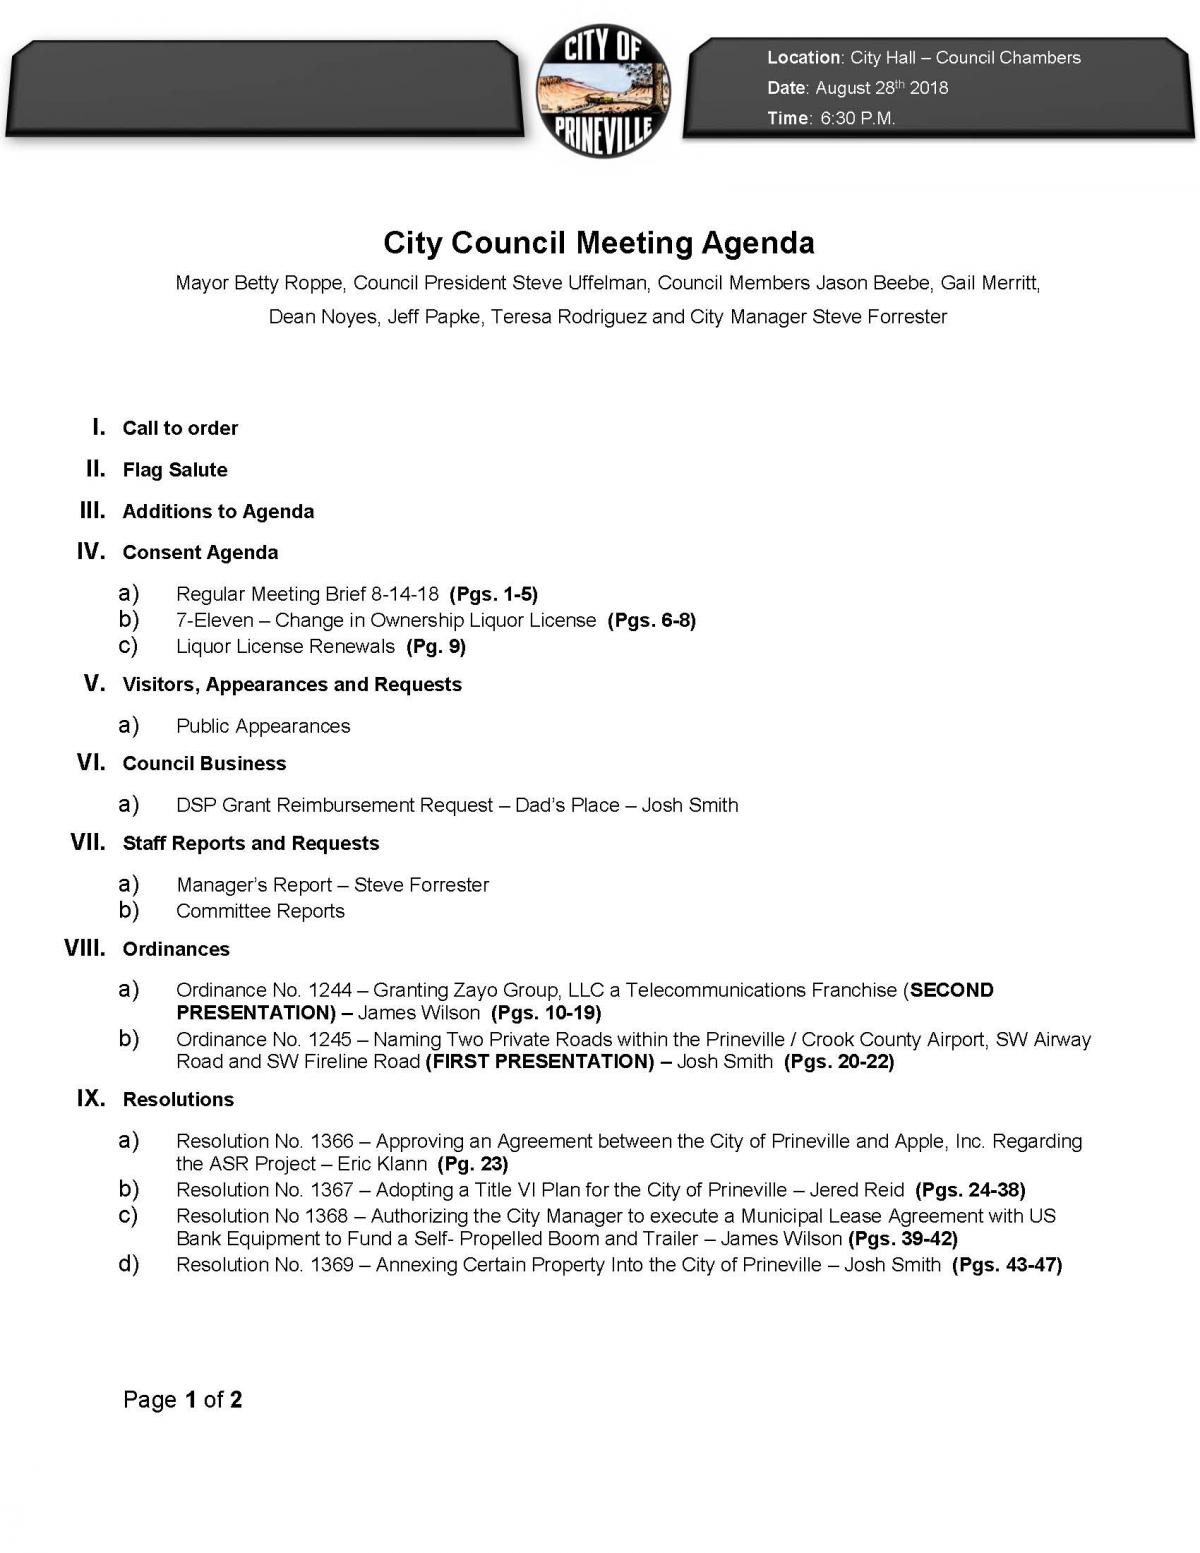 Council Agenda 8-24-18